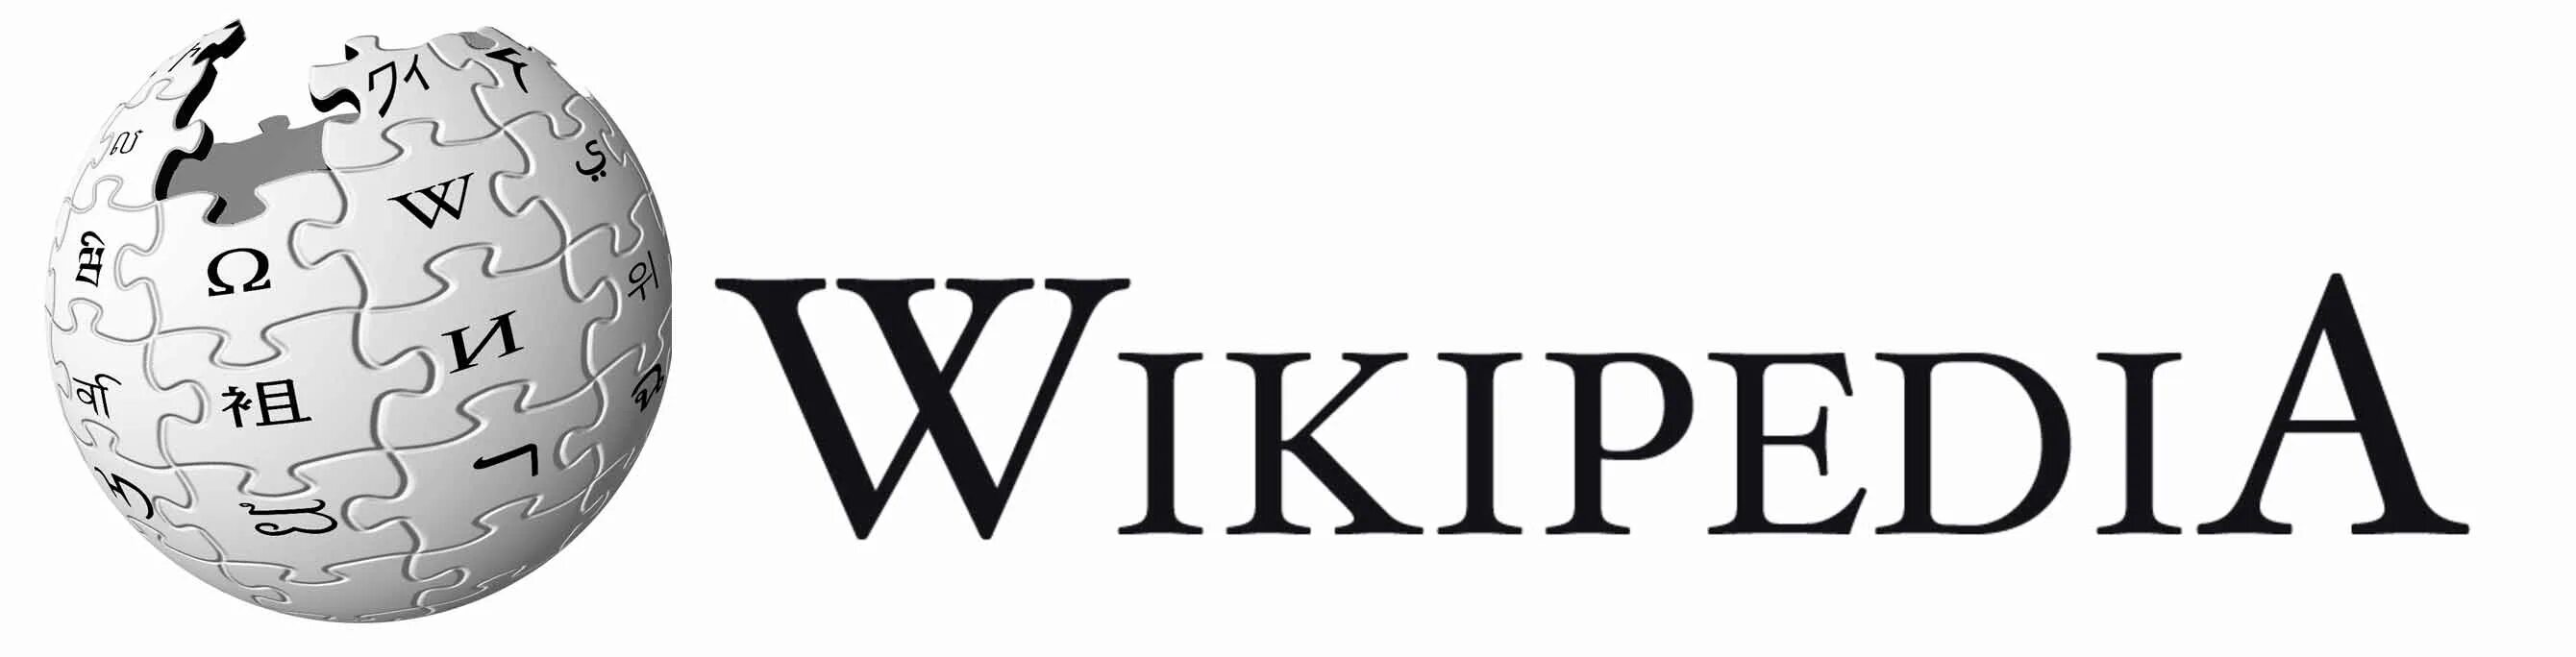 Https www wikipedia. Википедия эмблема. Значок Википедии. Википедия логотип картинка. Википедия картинки.